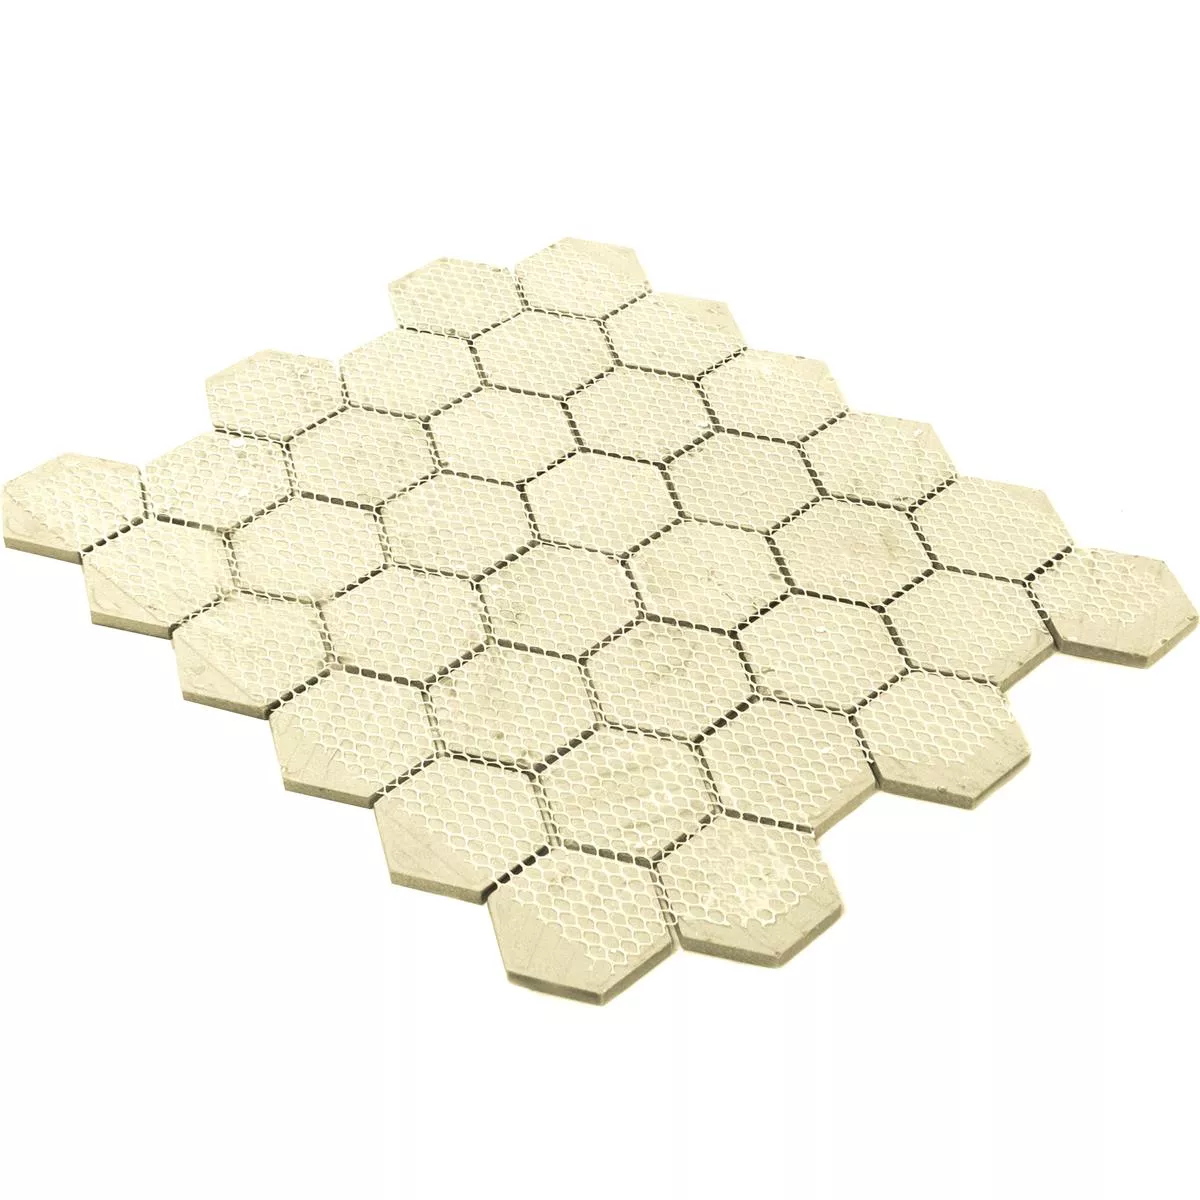 Ceramic Mosaic Tiles Eldertown Hexagon Blanc